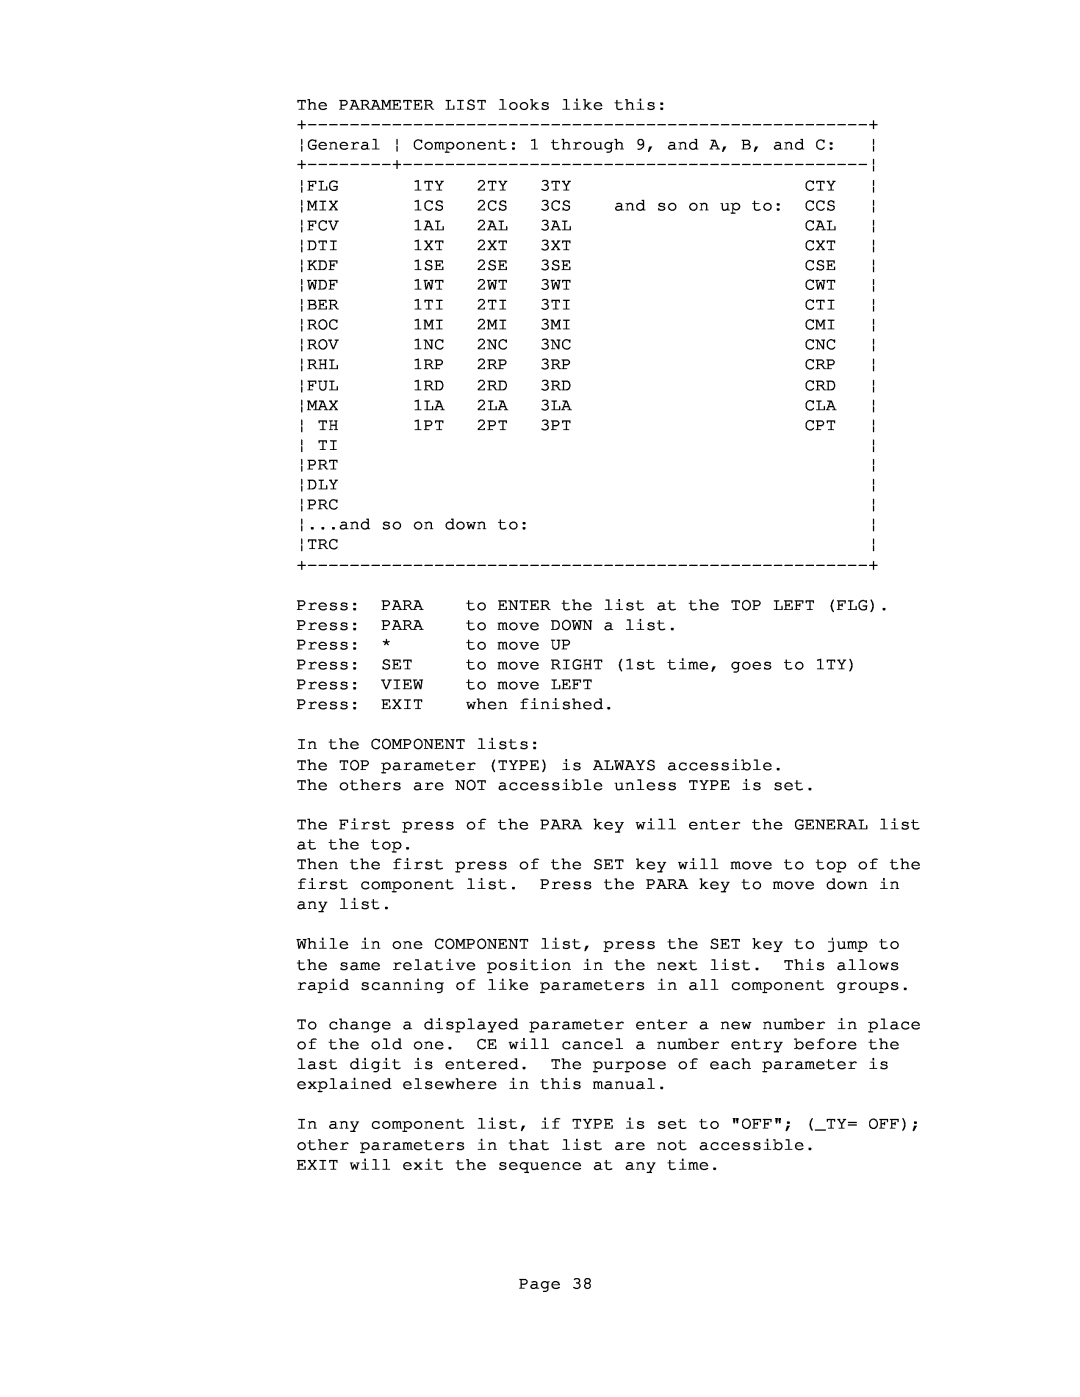 Conair GB, WSB manual The PARAMETER LIST looks like this 